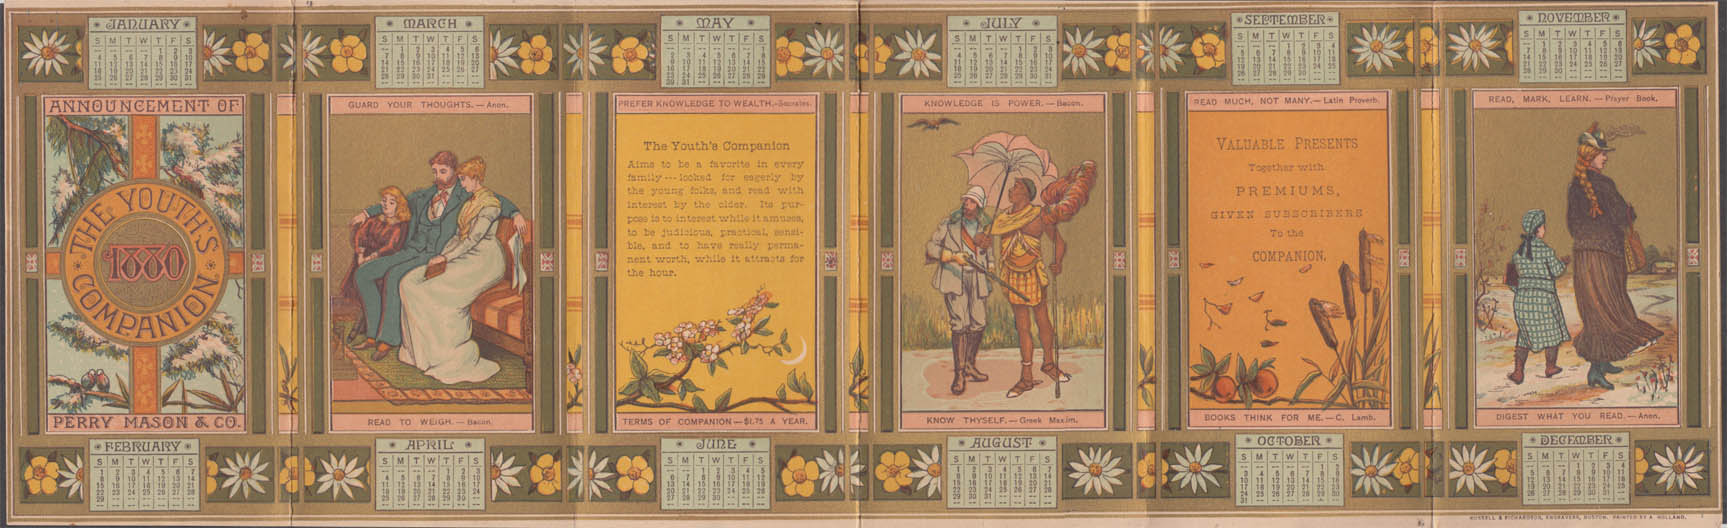 The Youth s Companion 6 panel folding calendar 1880 Perry Mason Co Boston